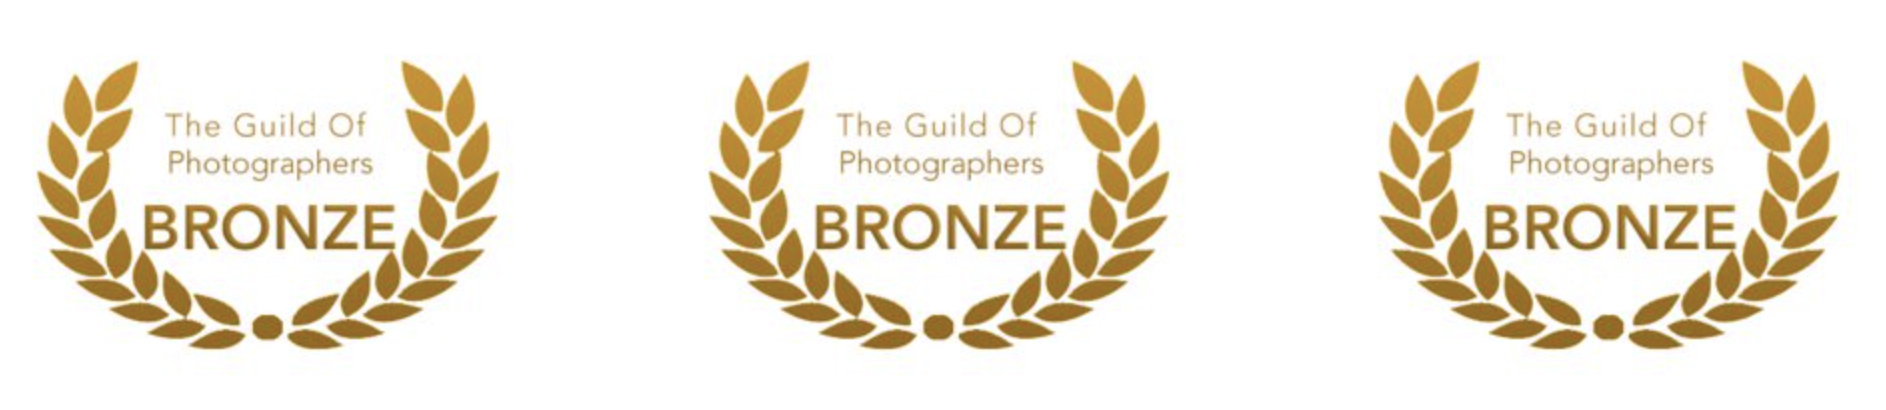 award winning photography